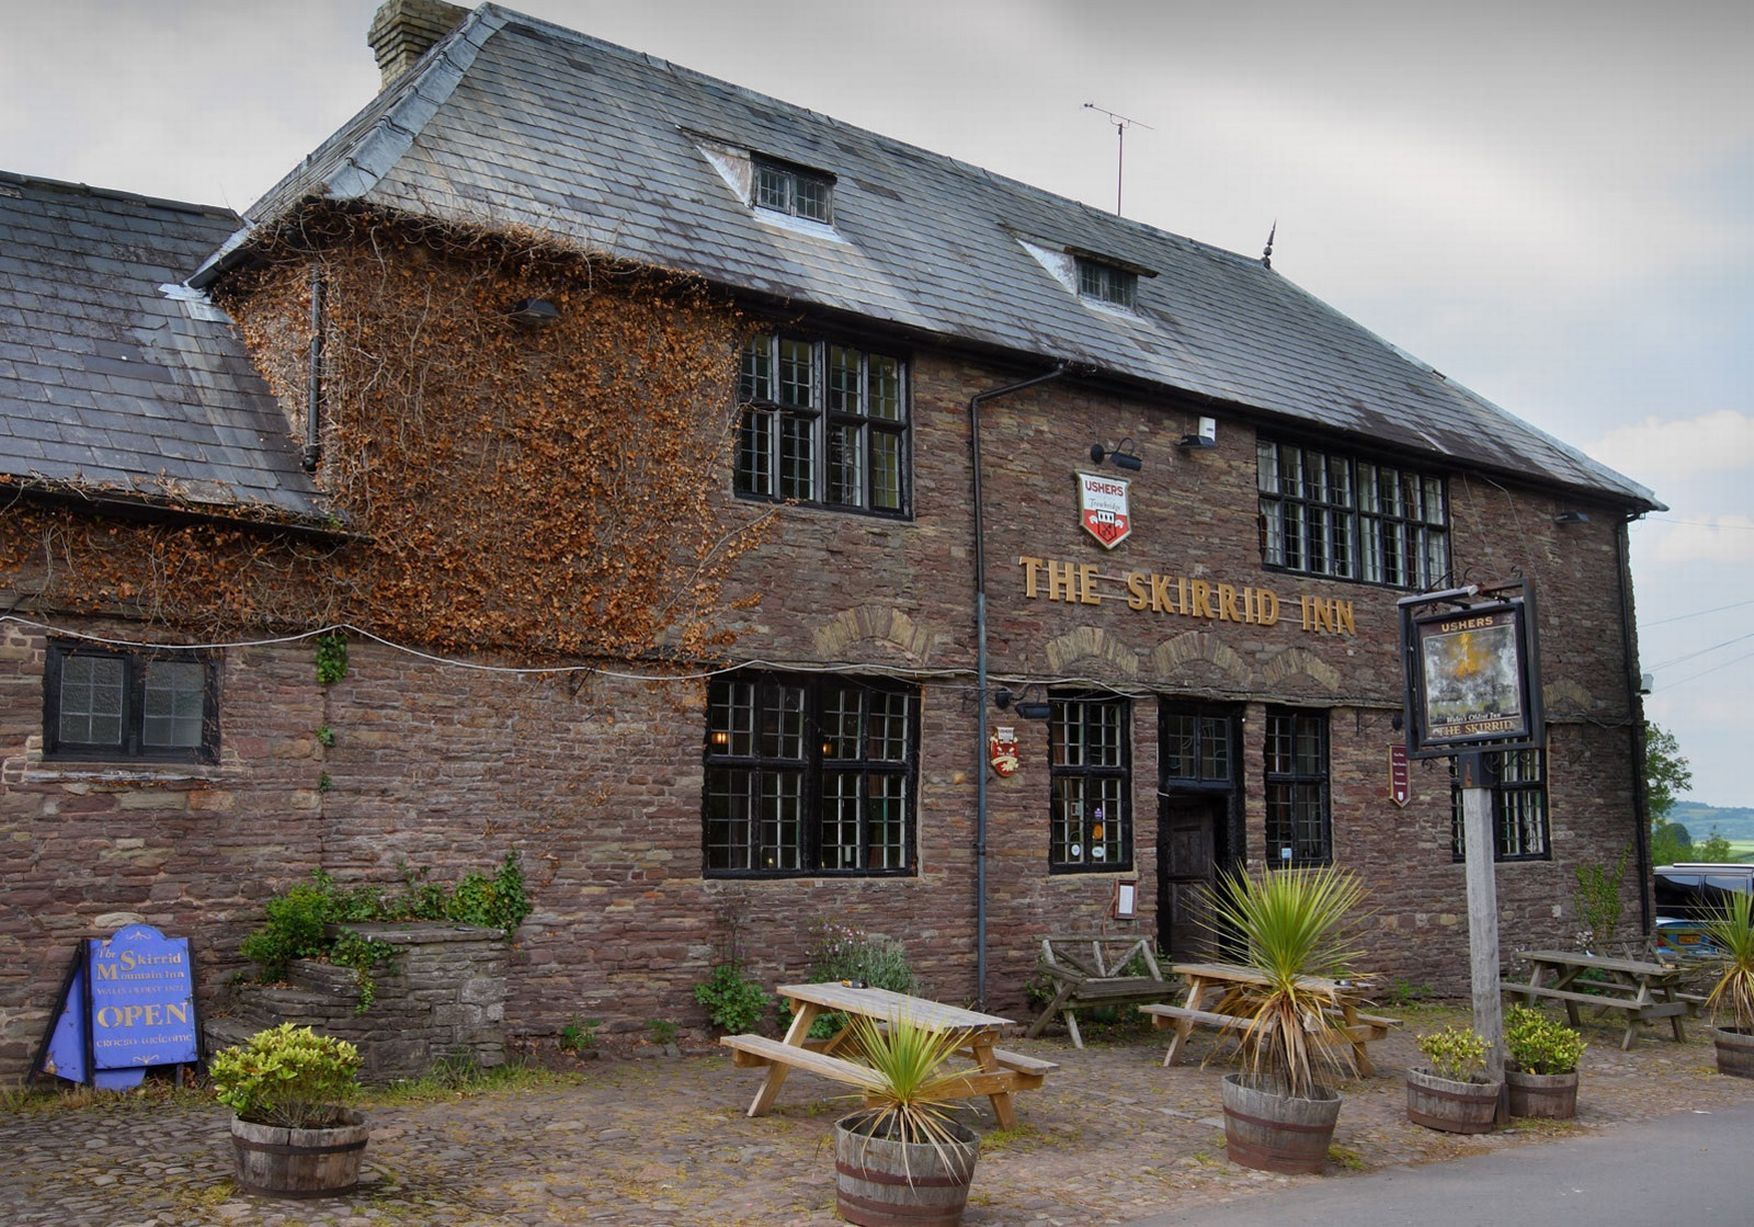 The Skirrid Inn - Old Welsh haunted pub